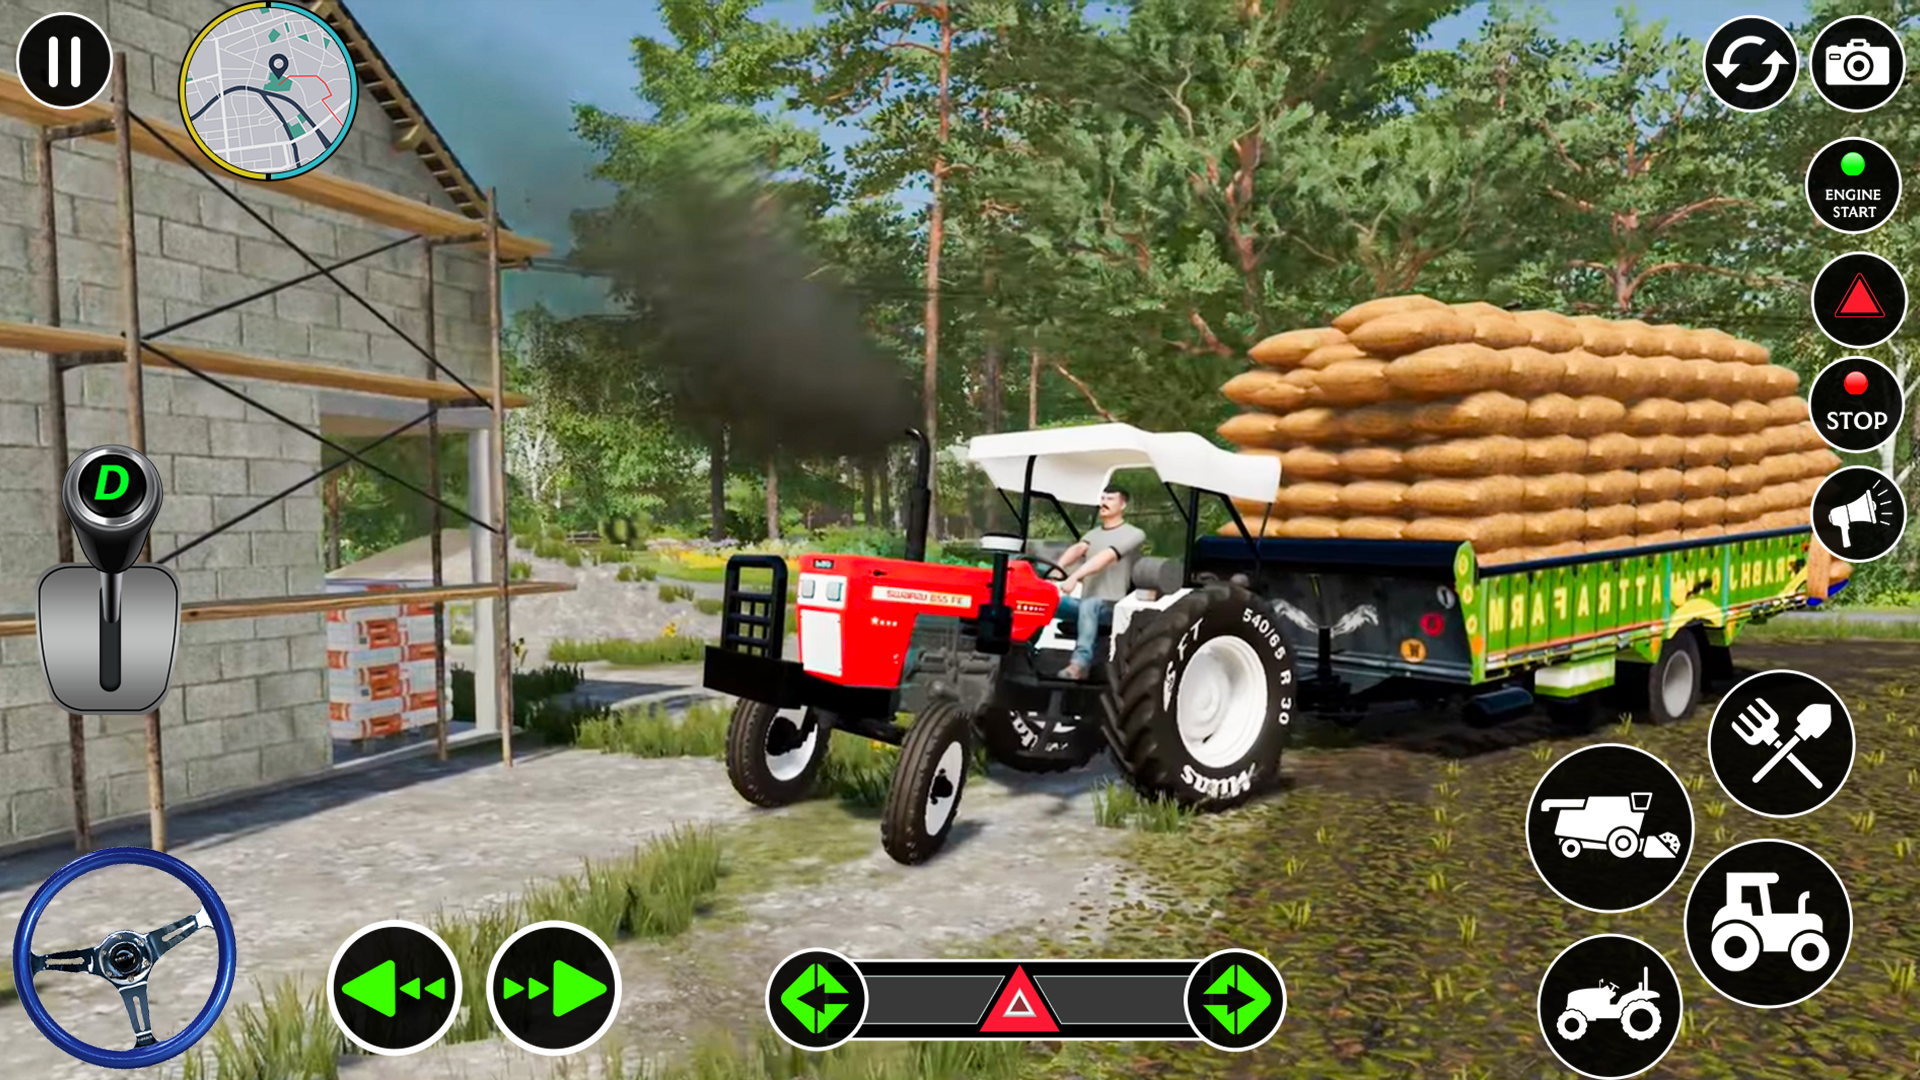 Download Farming Simulator 20 on PC with MEmu